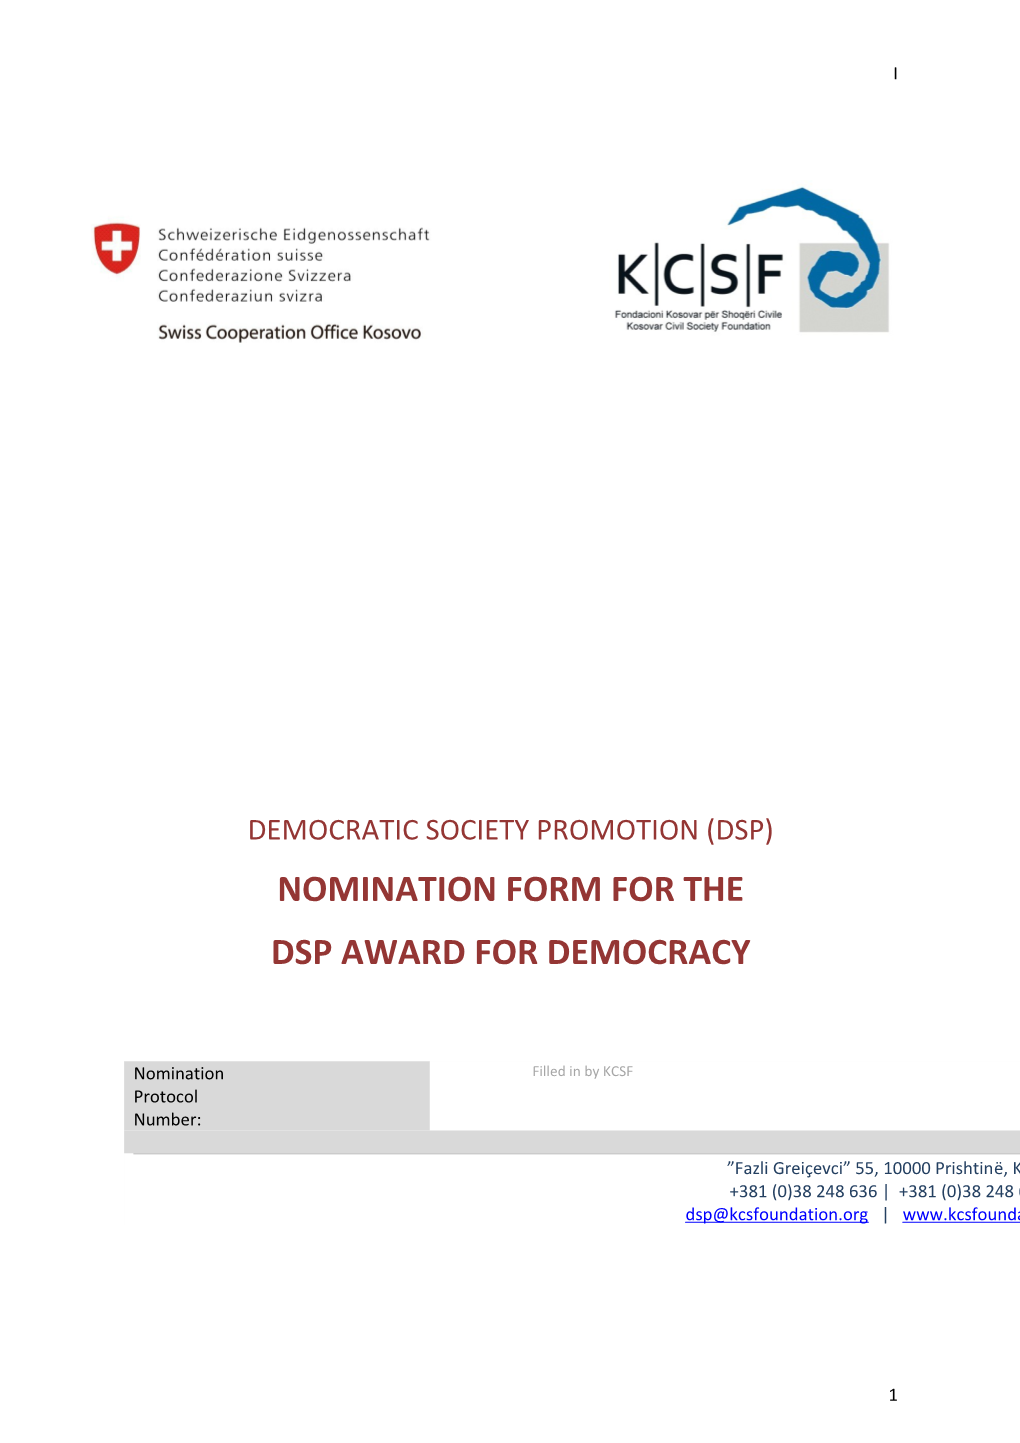 DSP Award for Democracy